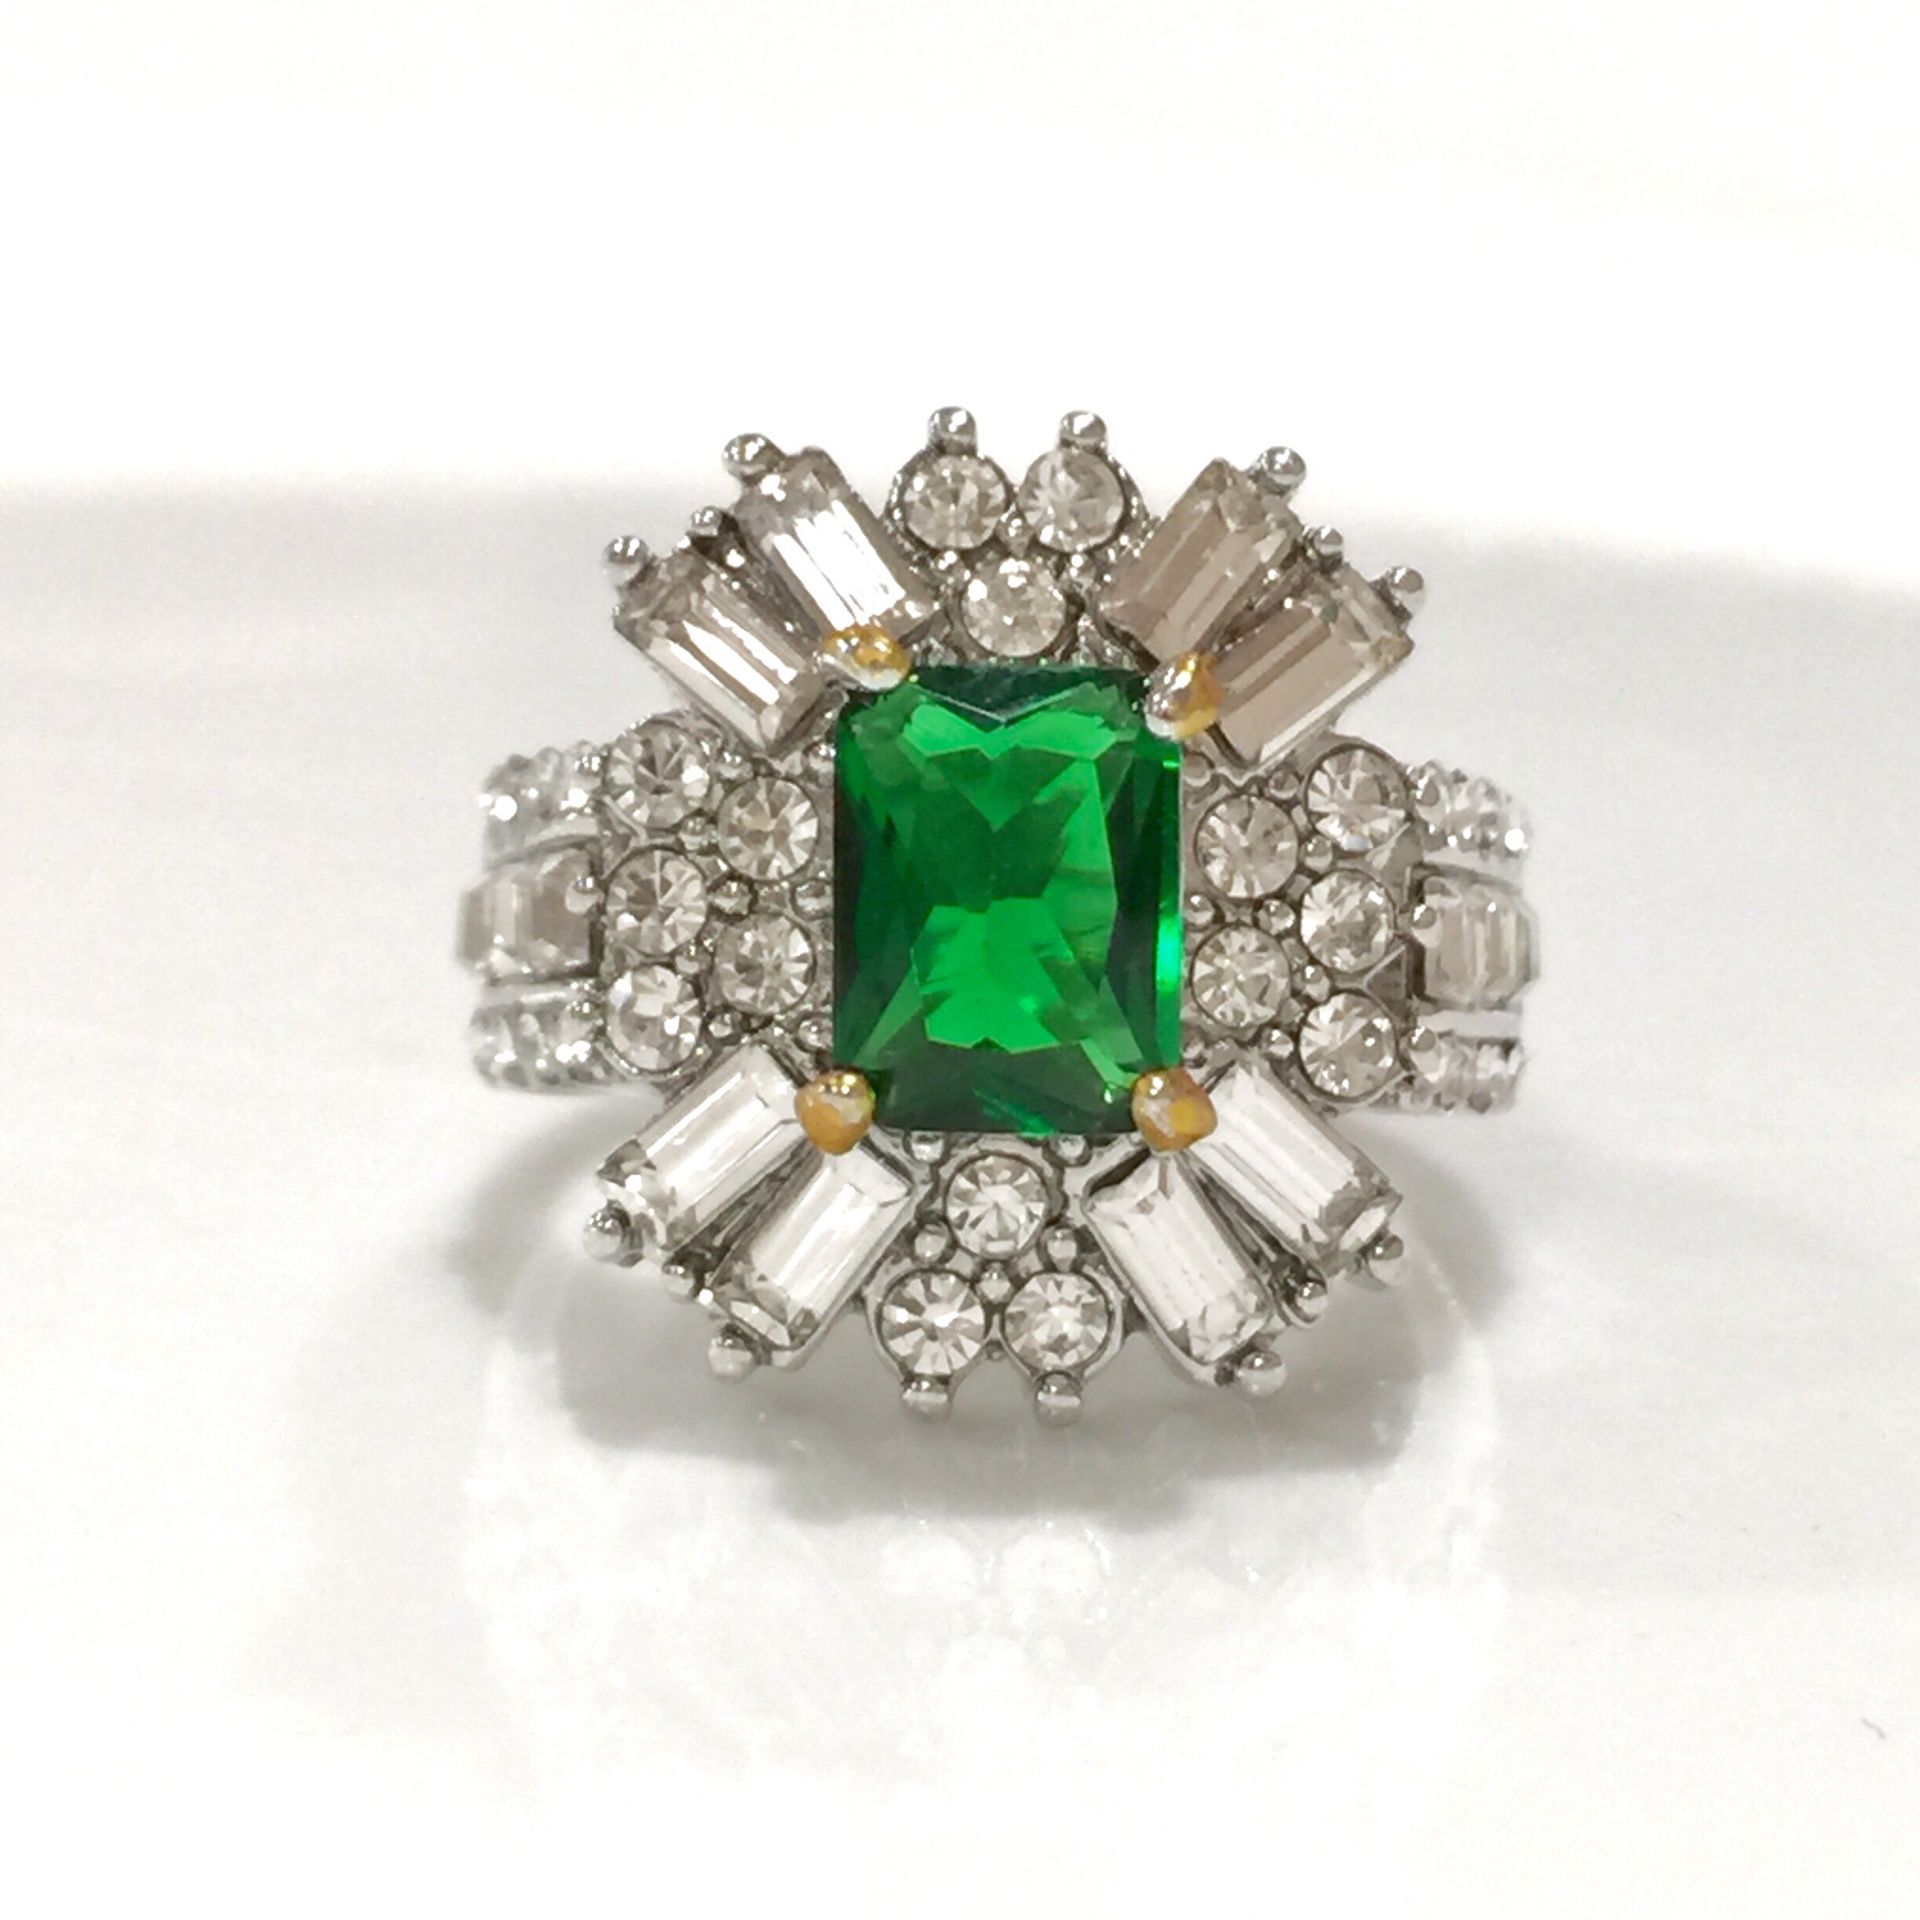 Silver princess cut emerald cz ring